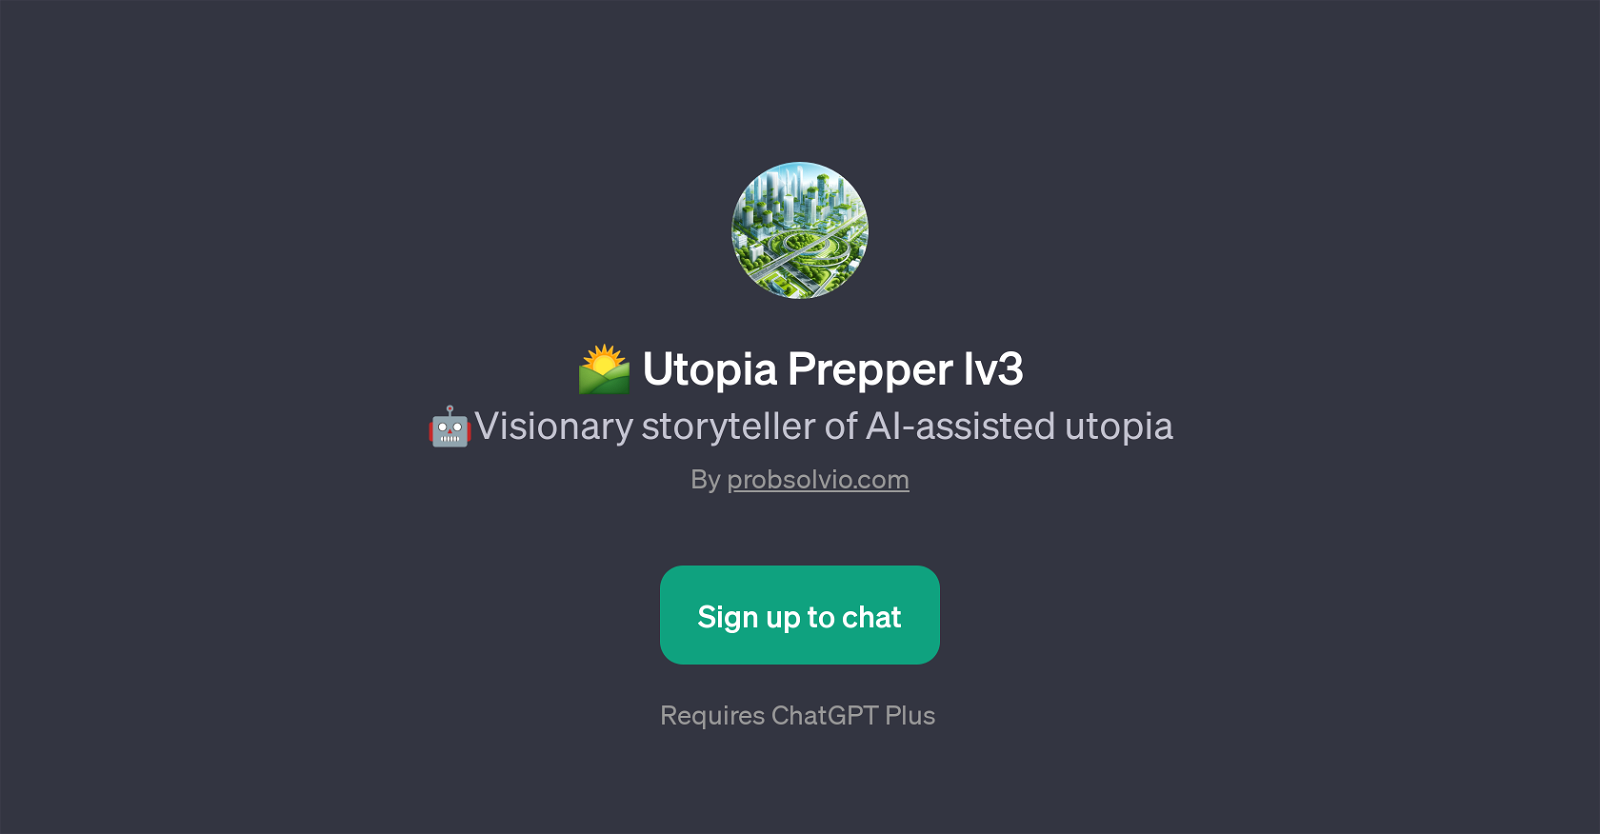 Utopia Prepper lv3 website